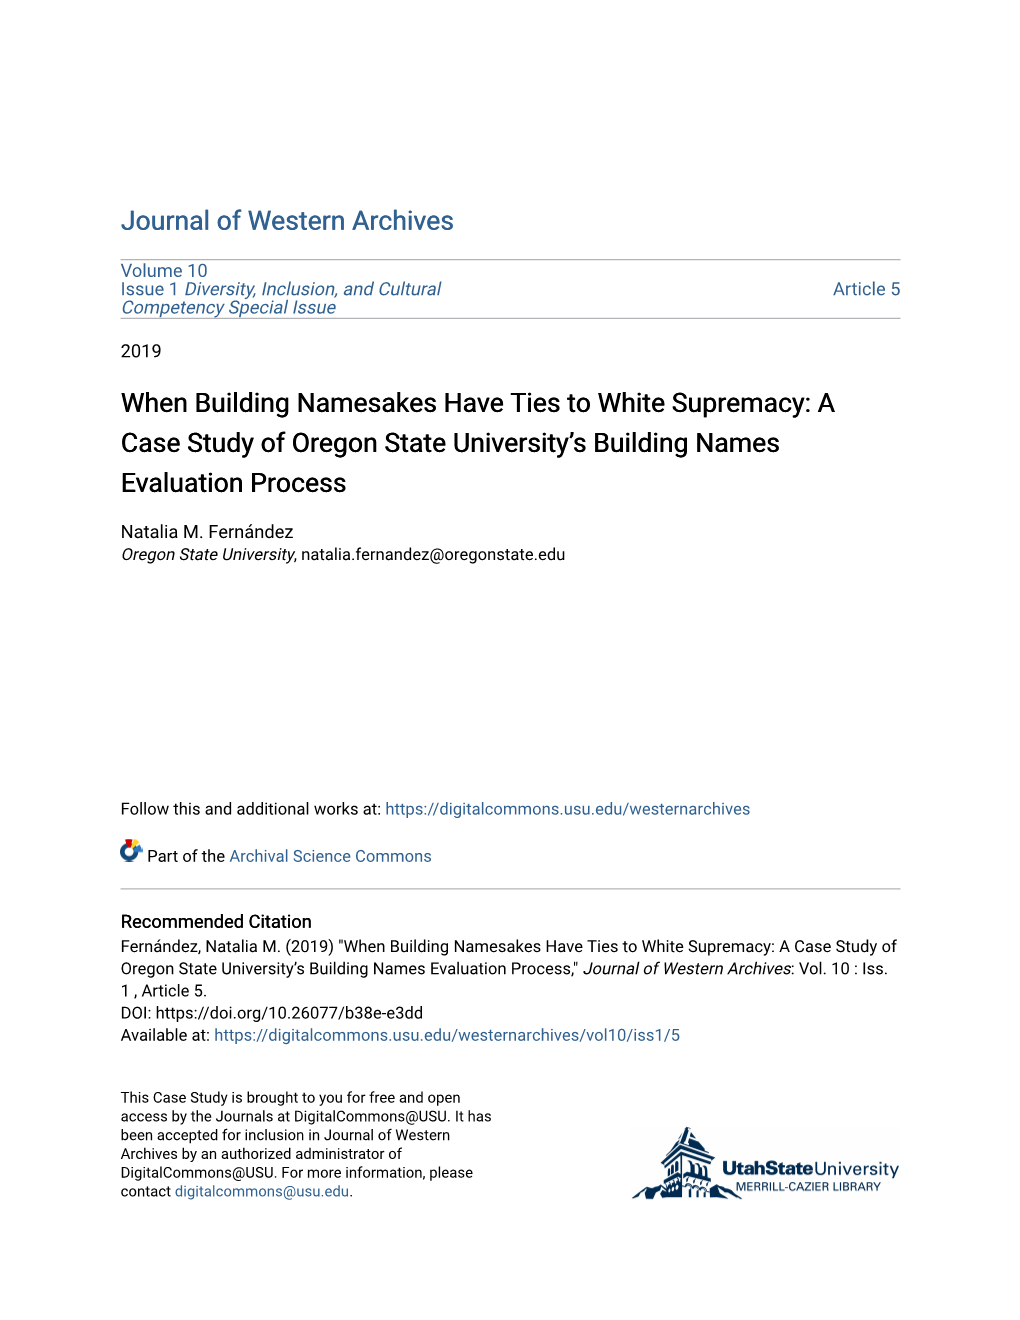 A Case Study of Oregon State University's Building Names Evaluation Proc